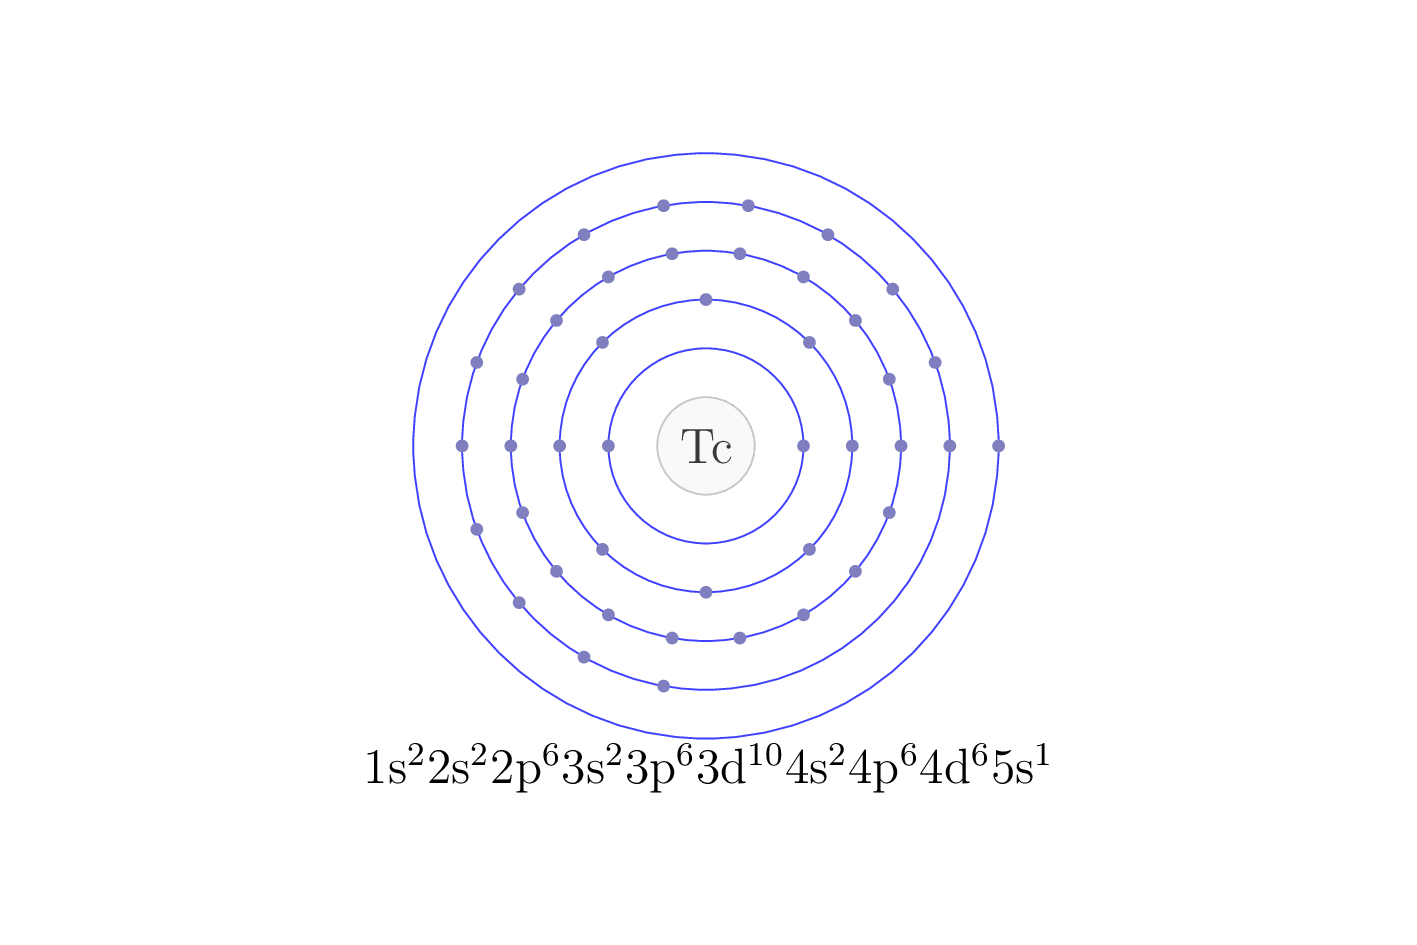 electron configuration of element Tc